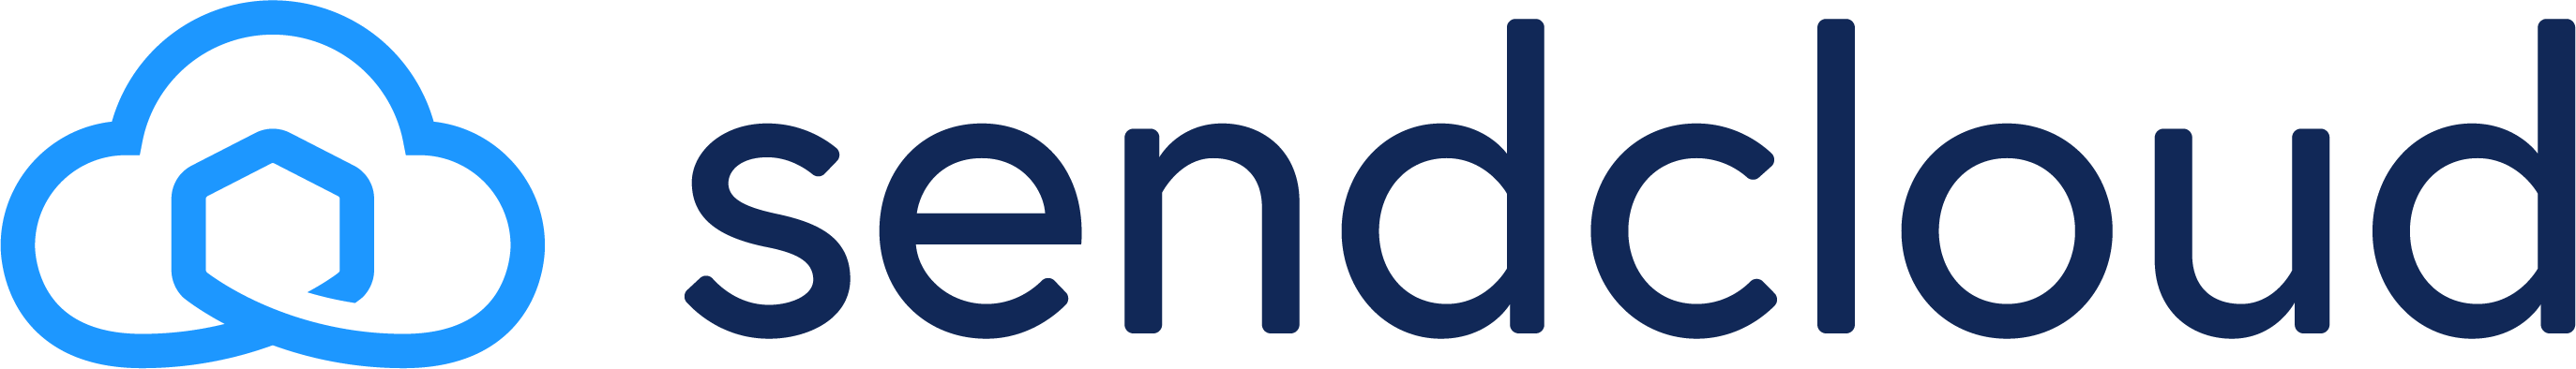 Sendcloud logo